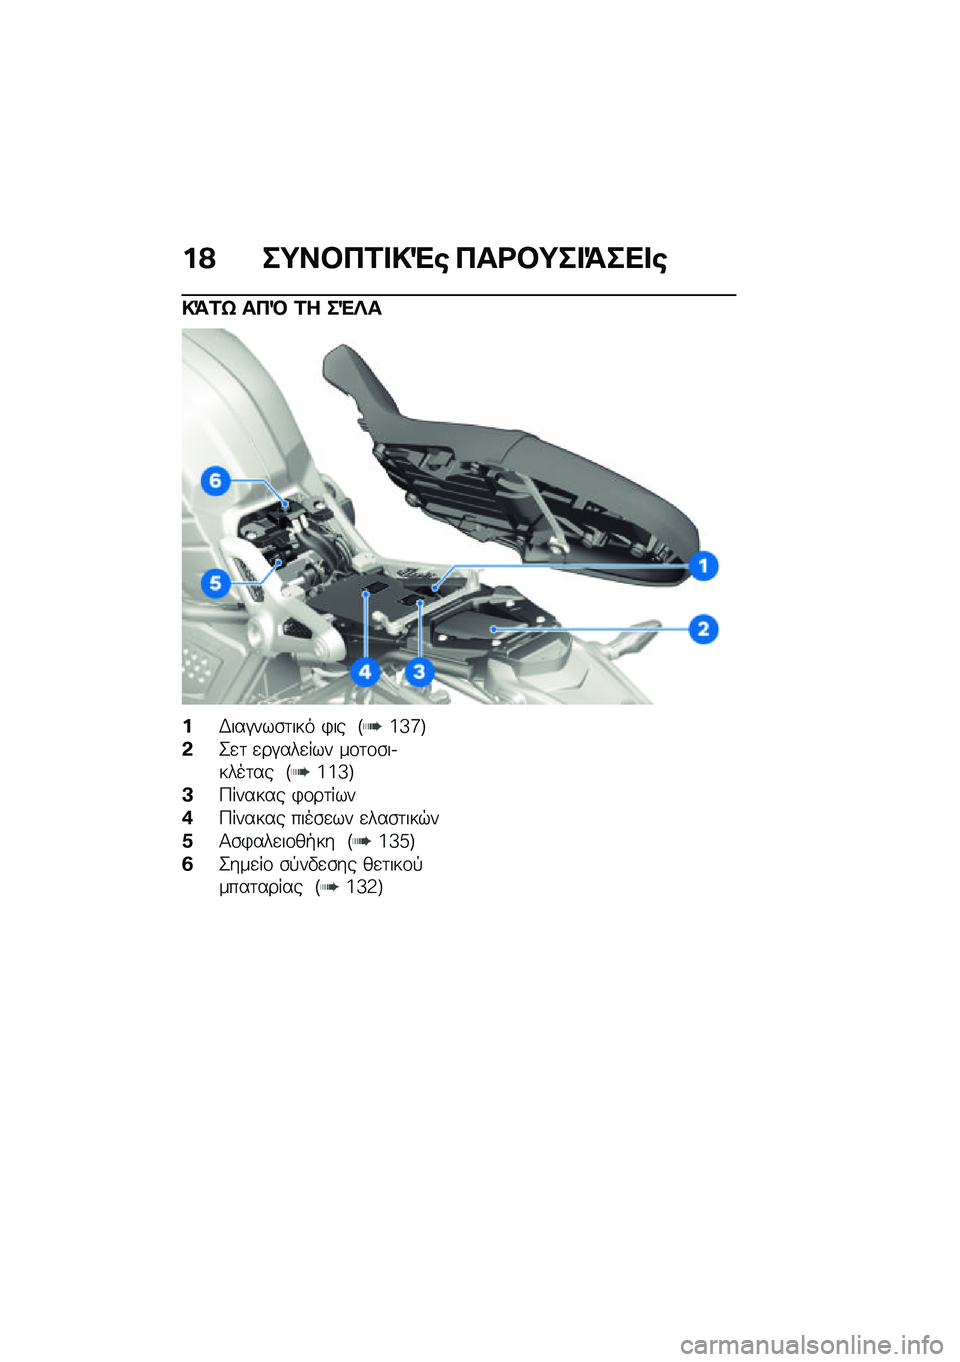 BMW MOTORRAD R NINE T SCRAMBLER 2021  Εγχειρίδιο ιδιοκτήτη (in Greek) ��? ��;��#��2� �!�"�\b ���<�#�;�� �=��� �\b
�!�=�2�k ���D �2� ��"�R�
��,���#���\b�	��� �)�� �E�a�^�e�F
�&�2�
�	 �
��#���
��� ��\f�	�\f�\b��.����	�� �E�a�a�^�F
�A�9